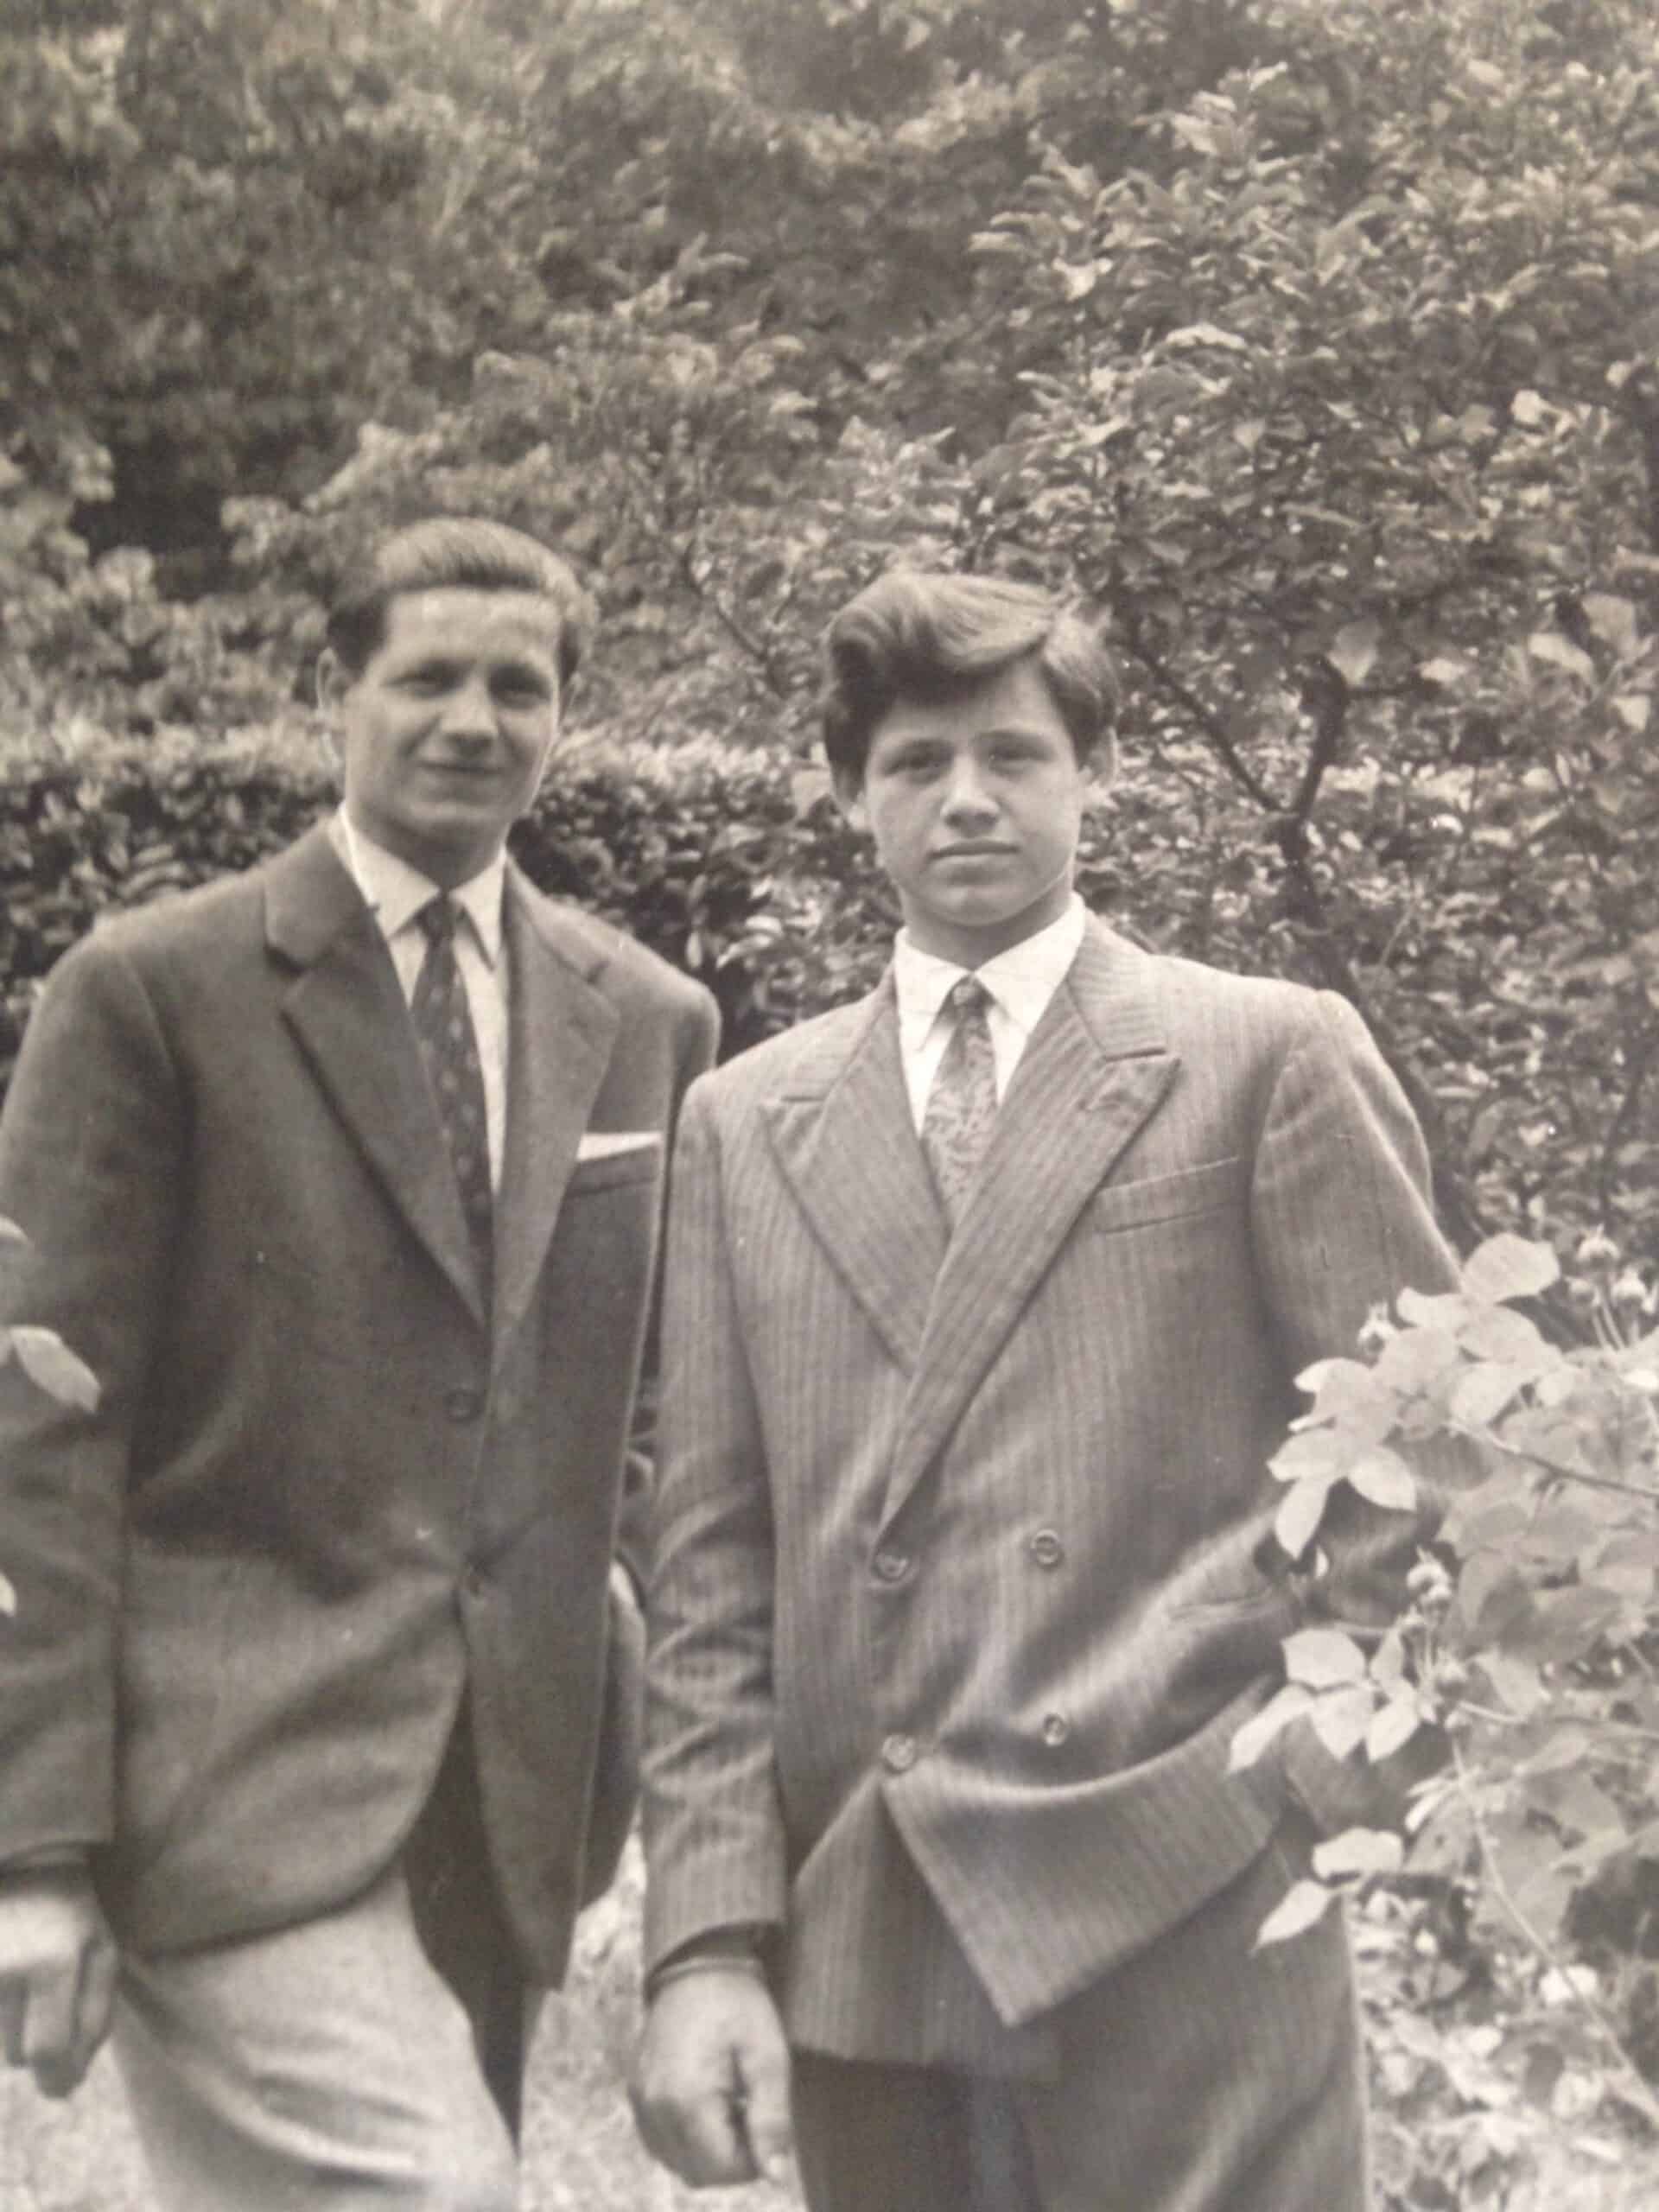 Mario (Dario's father) Lenarduzzi is pictured (right) with his brother, Luigi Lenarduzzi.